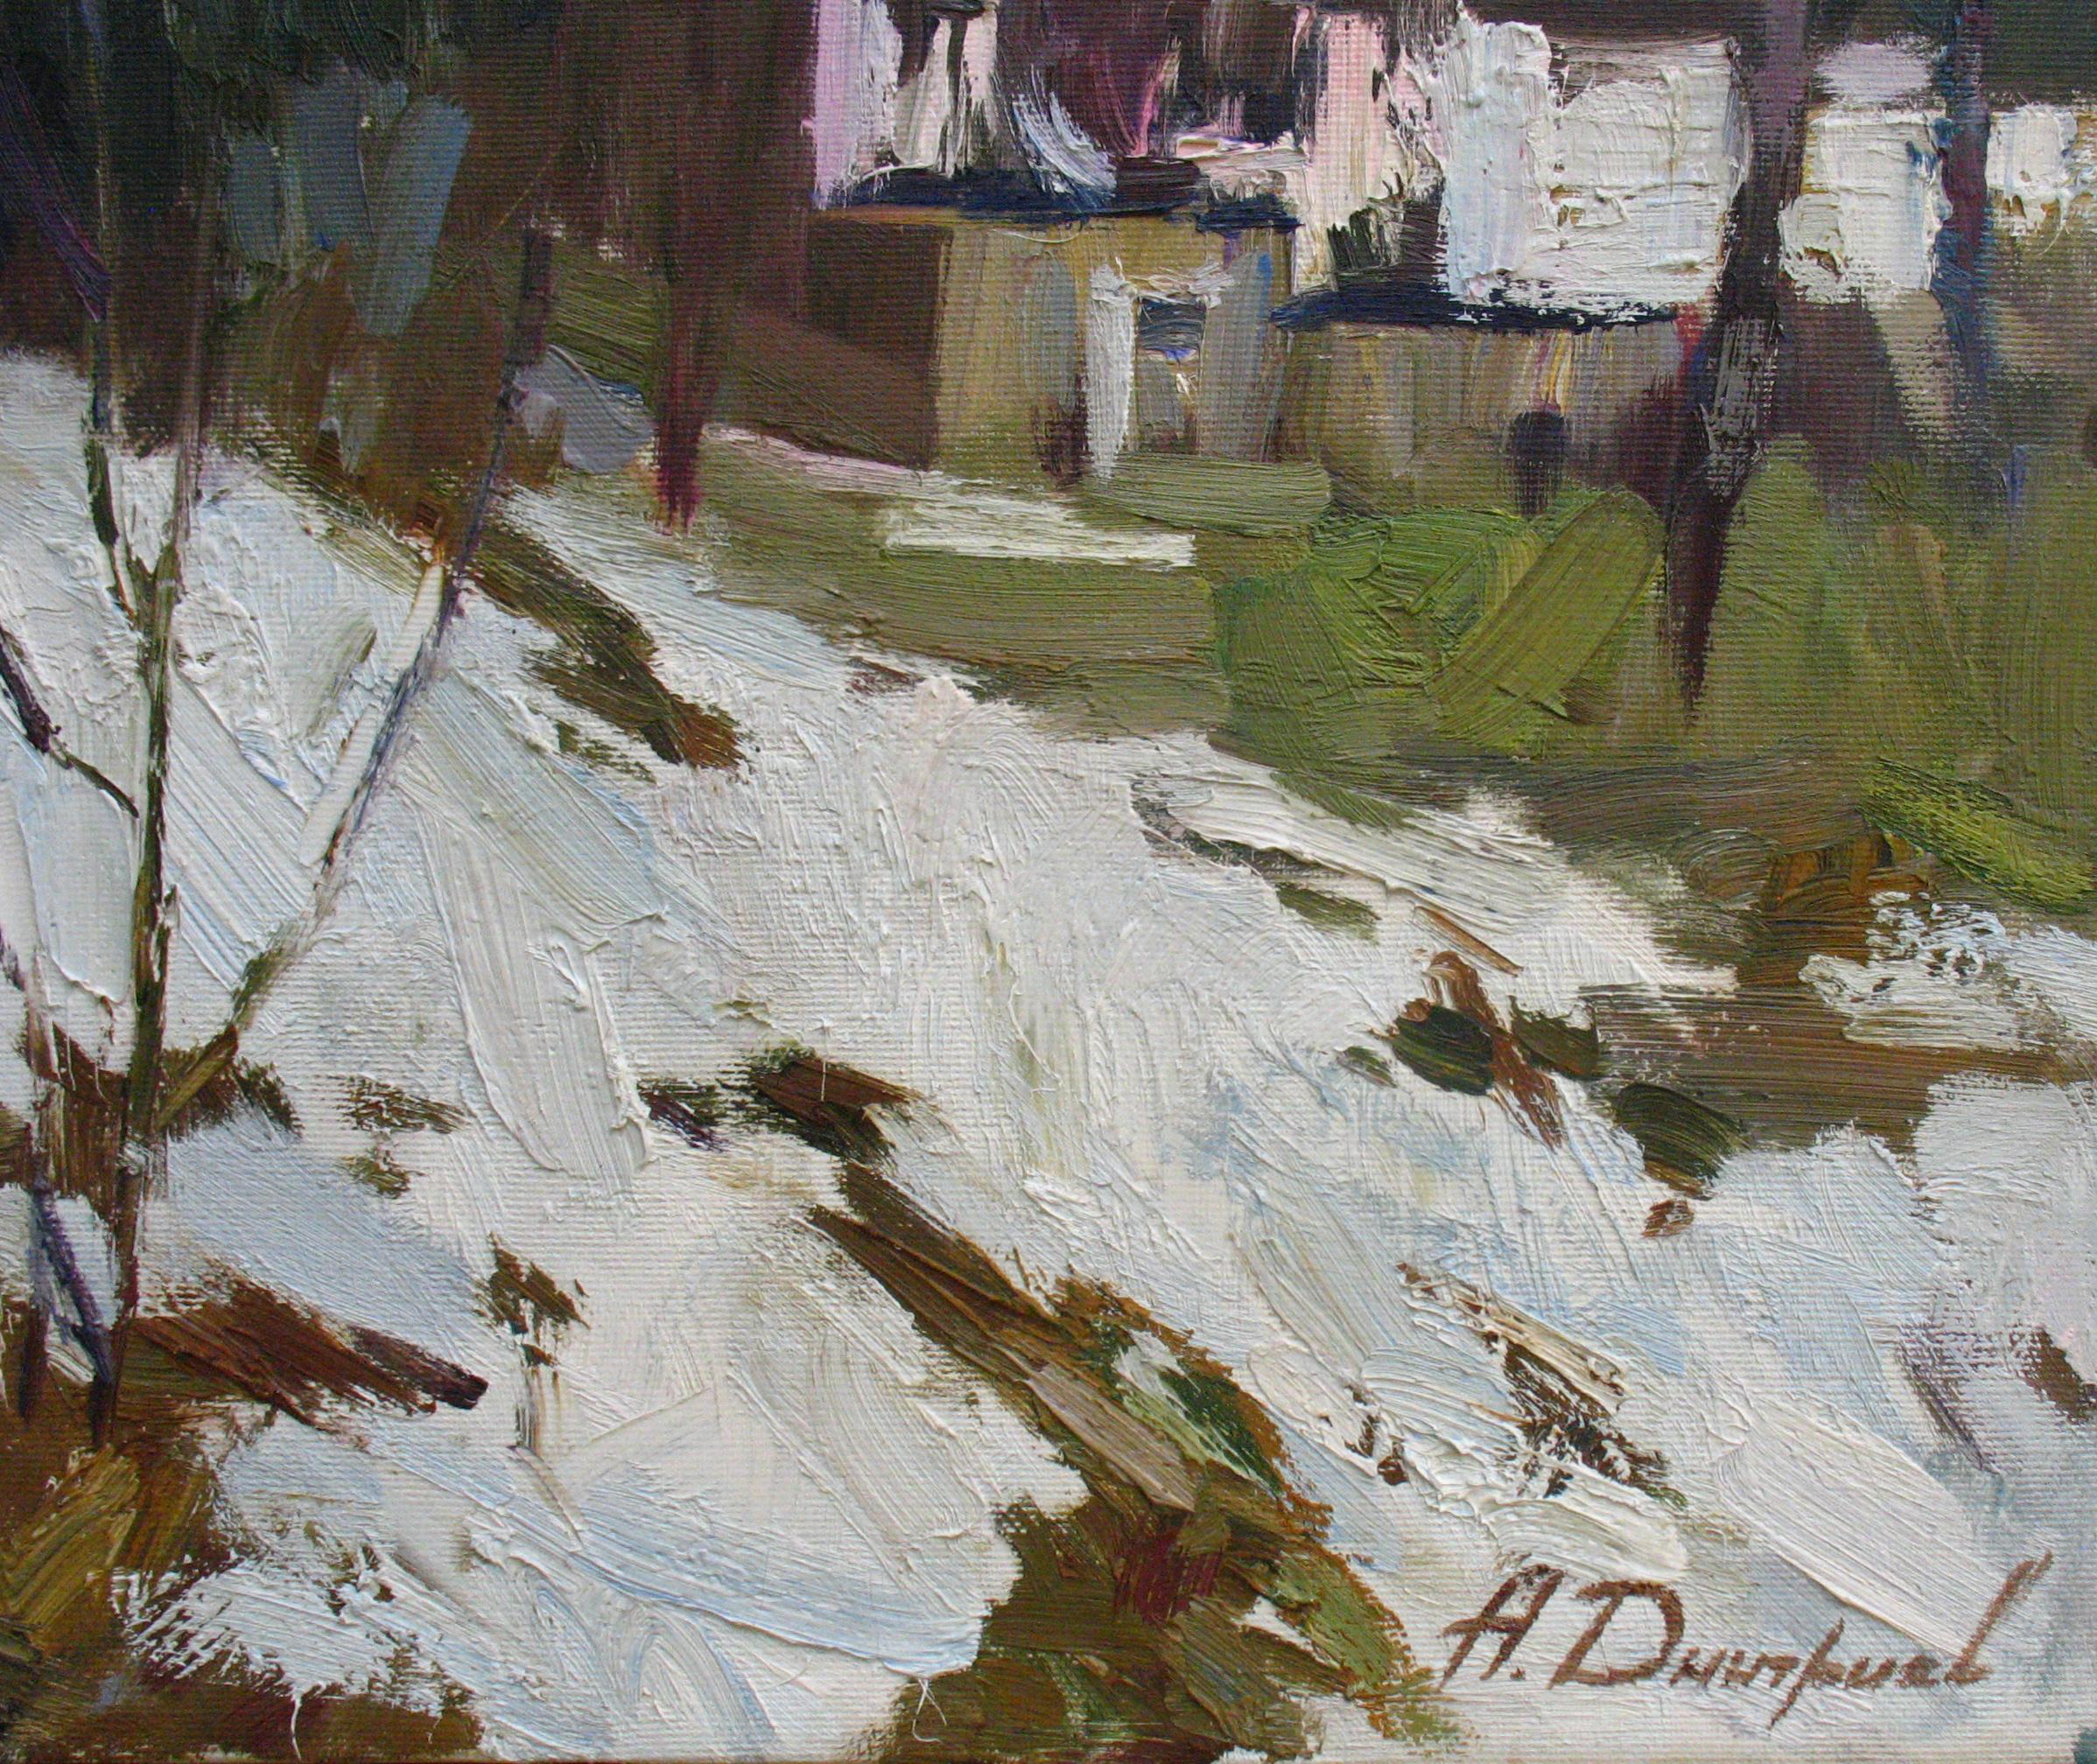 In Carpathians - Impressionist Painting by Dmitriev Alexey Olegovich